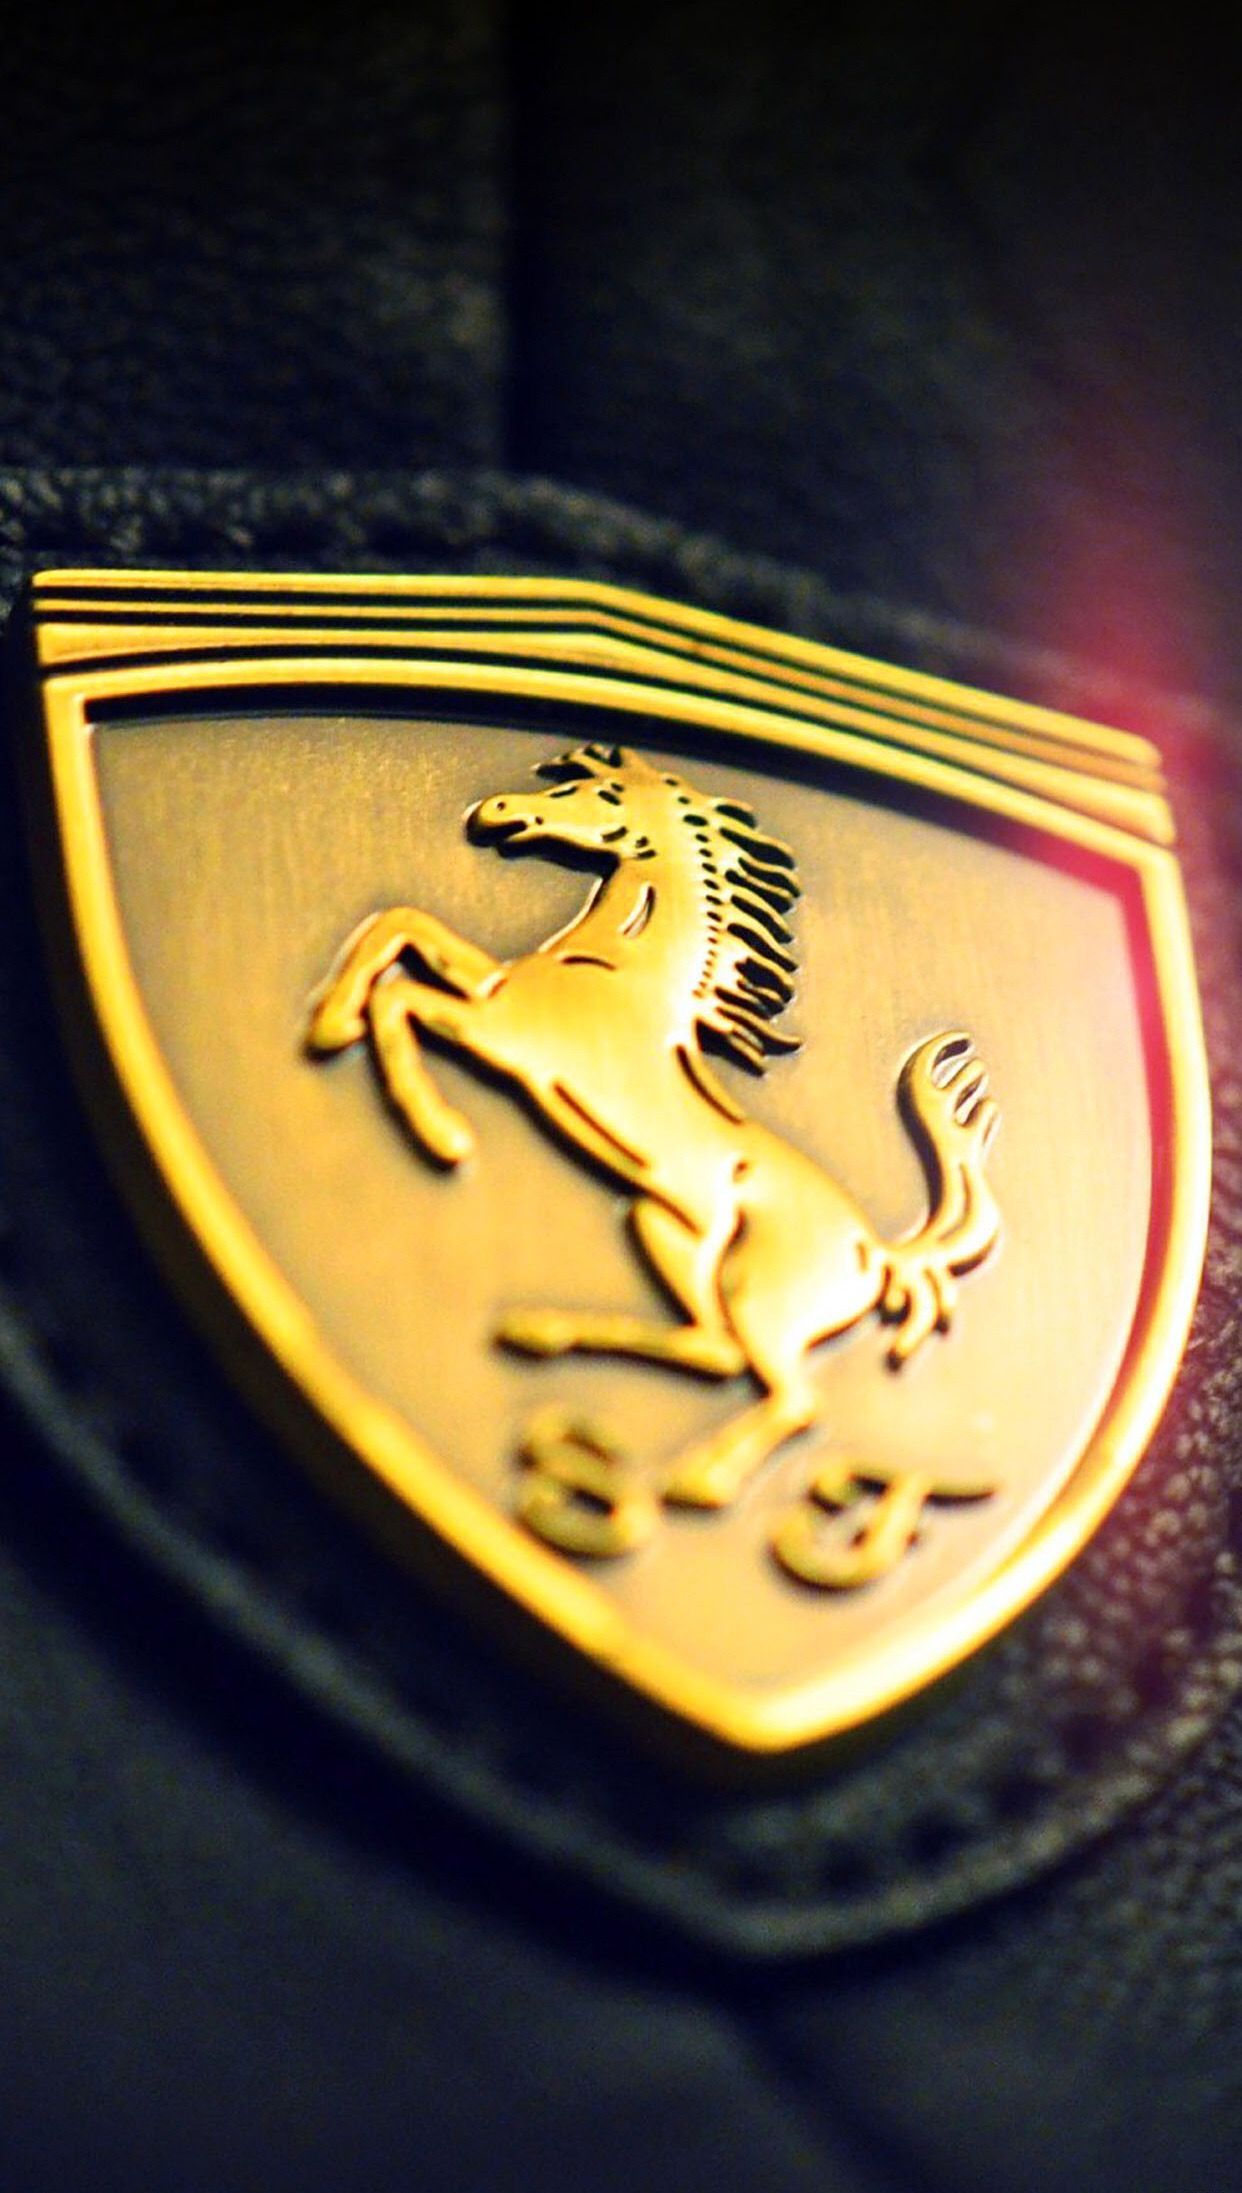 Gold Ferrari logo. Ferrari, Gold wallpaper hd, iPhone wallpaper